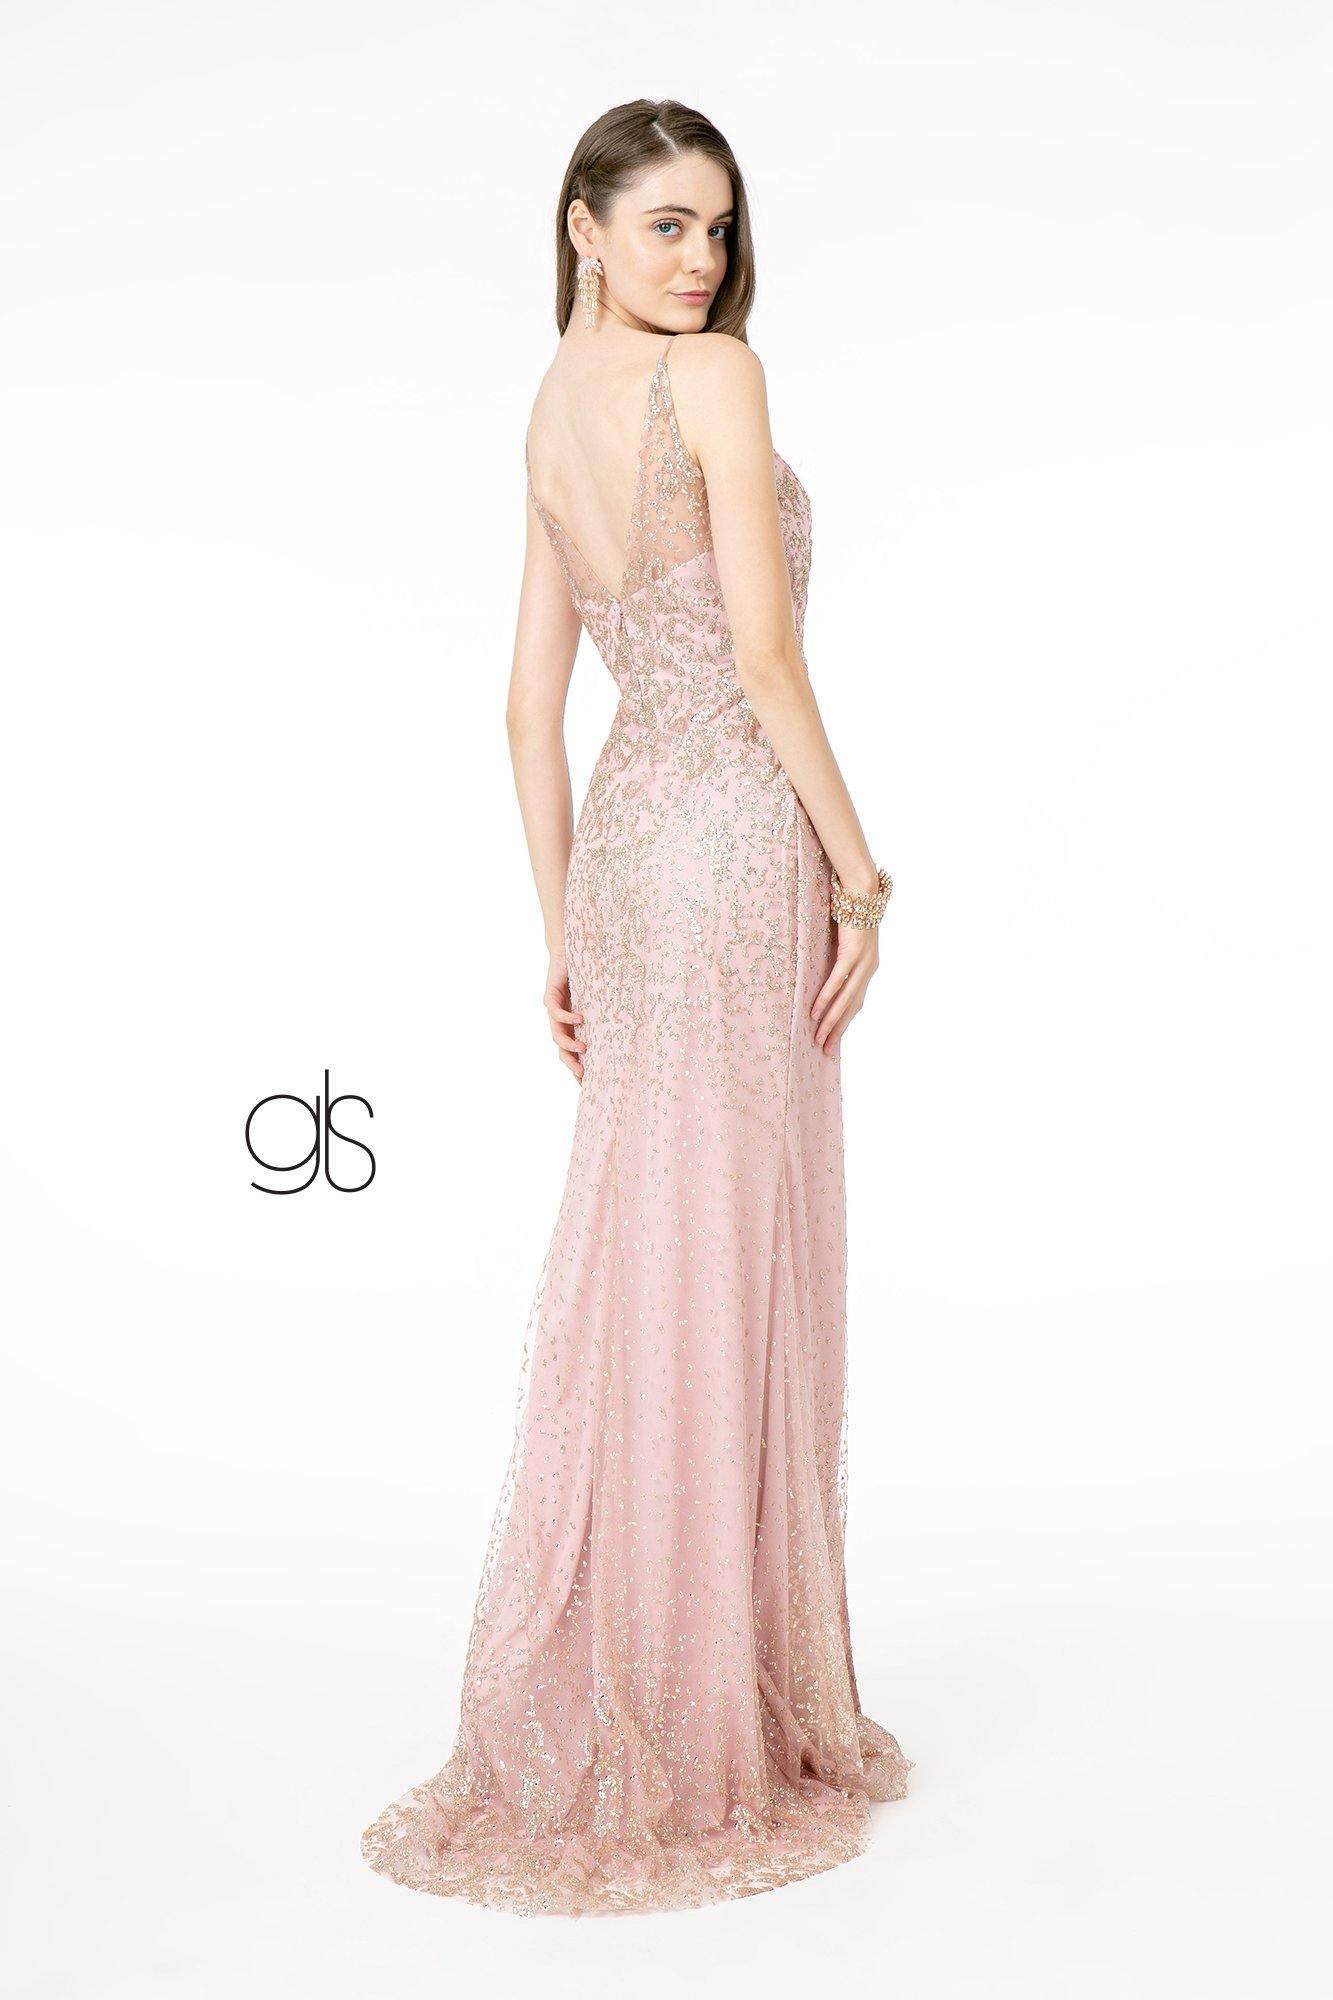 Glitter Mesh Illusion Long Prom Dress - The Dress Outlet Elizabeth K